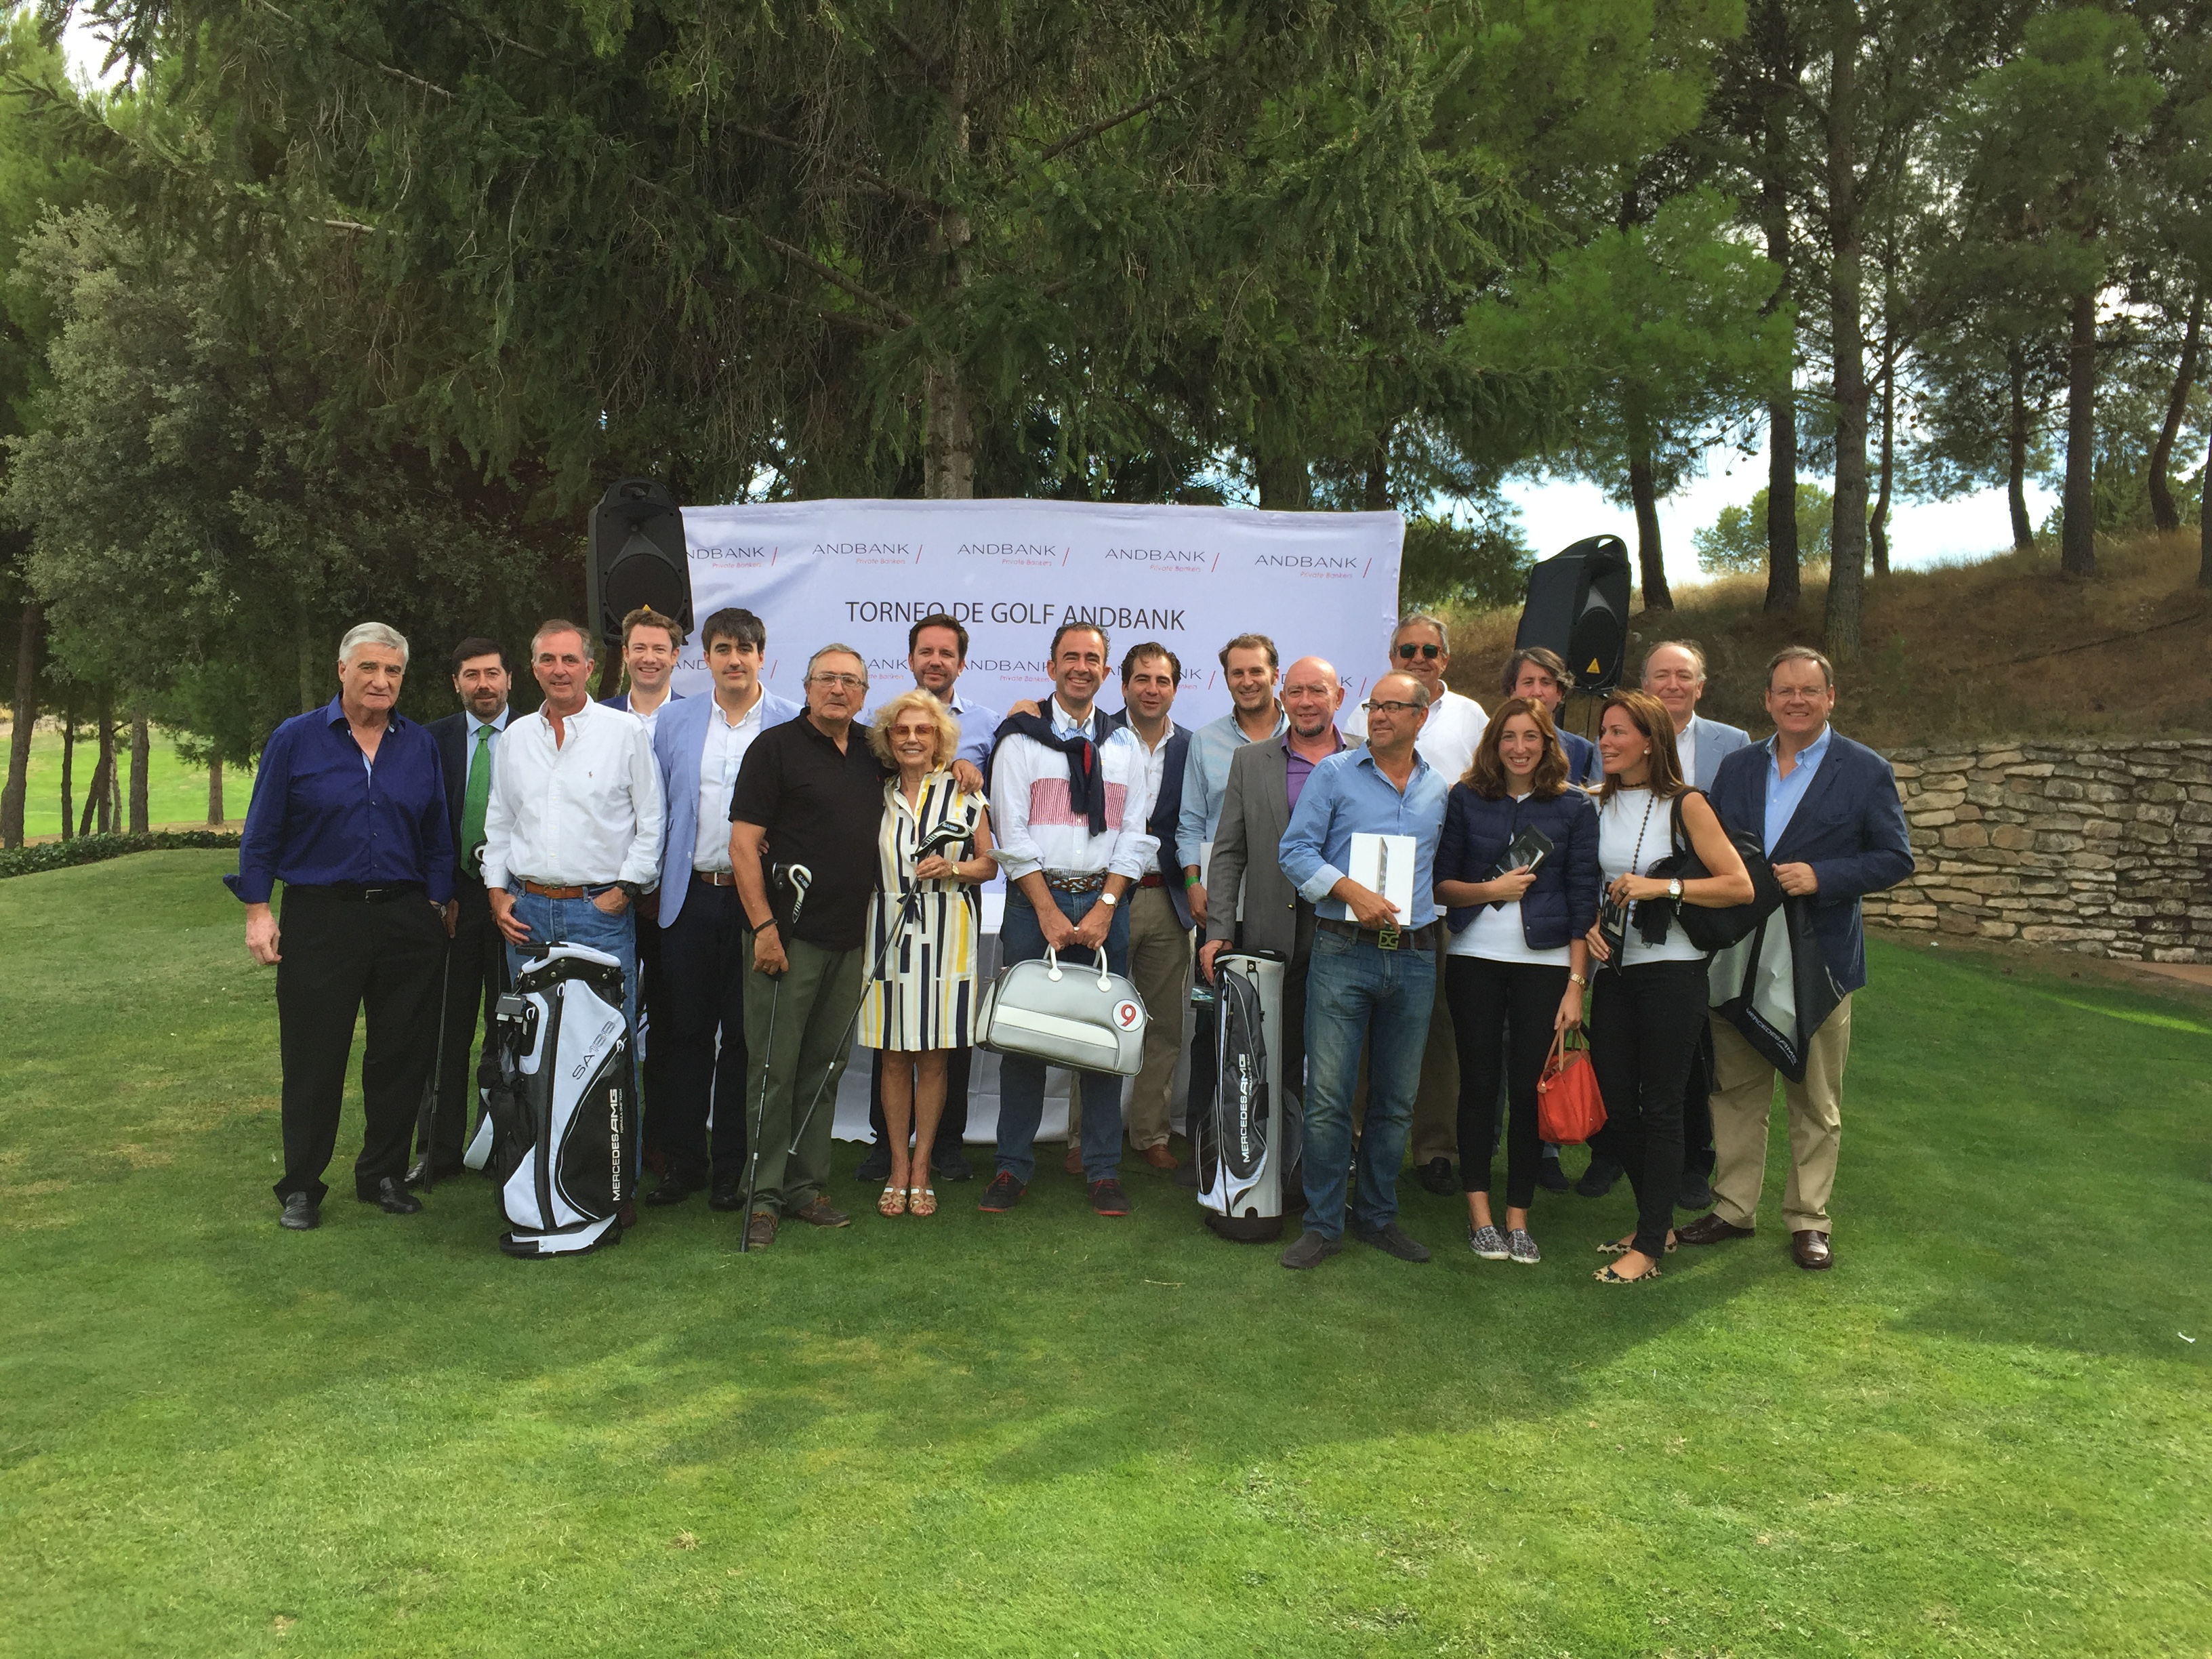 El Torneo de Golf Andbank de Zaragoza congrega a 80 jugadores